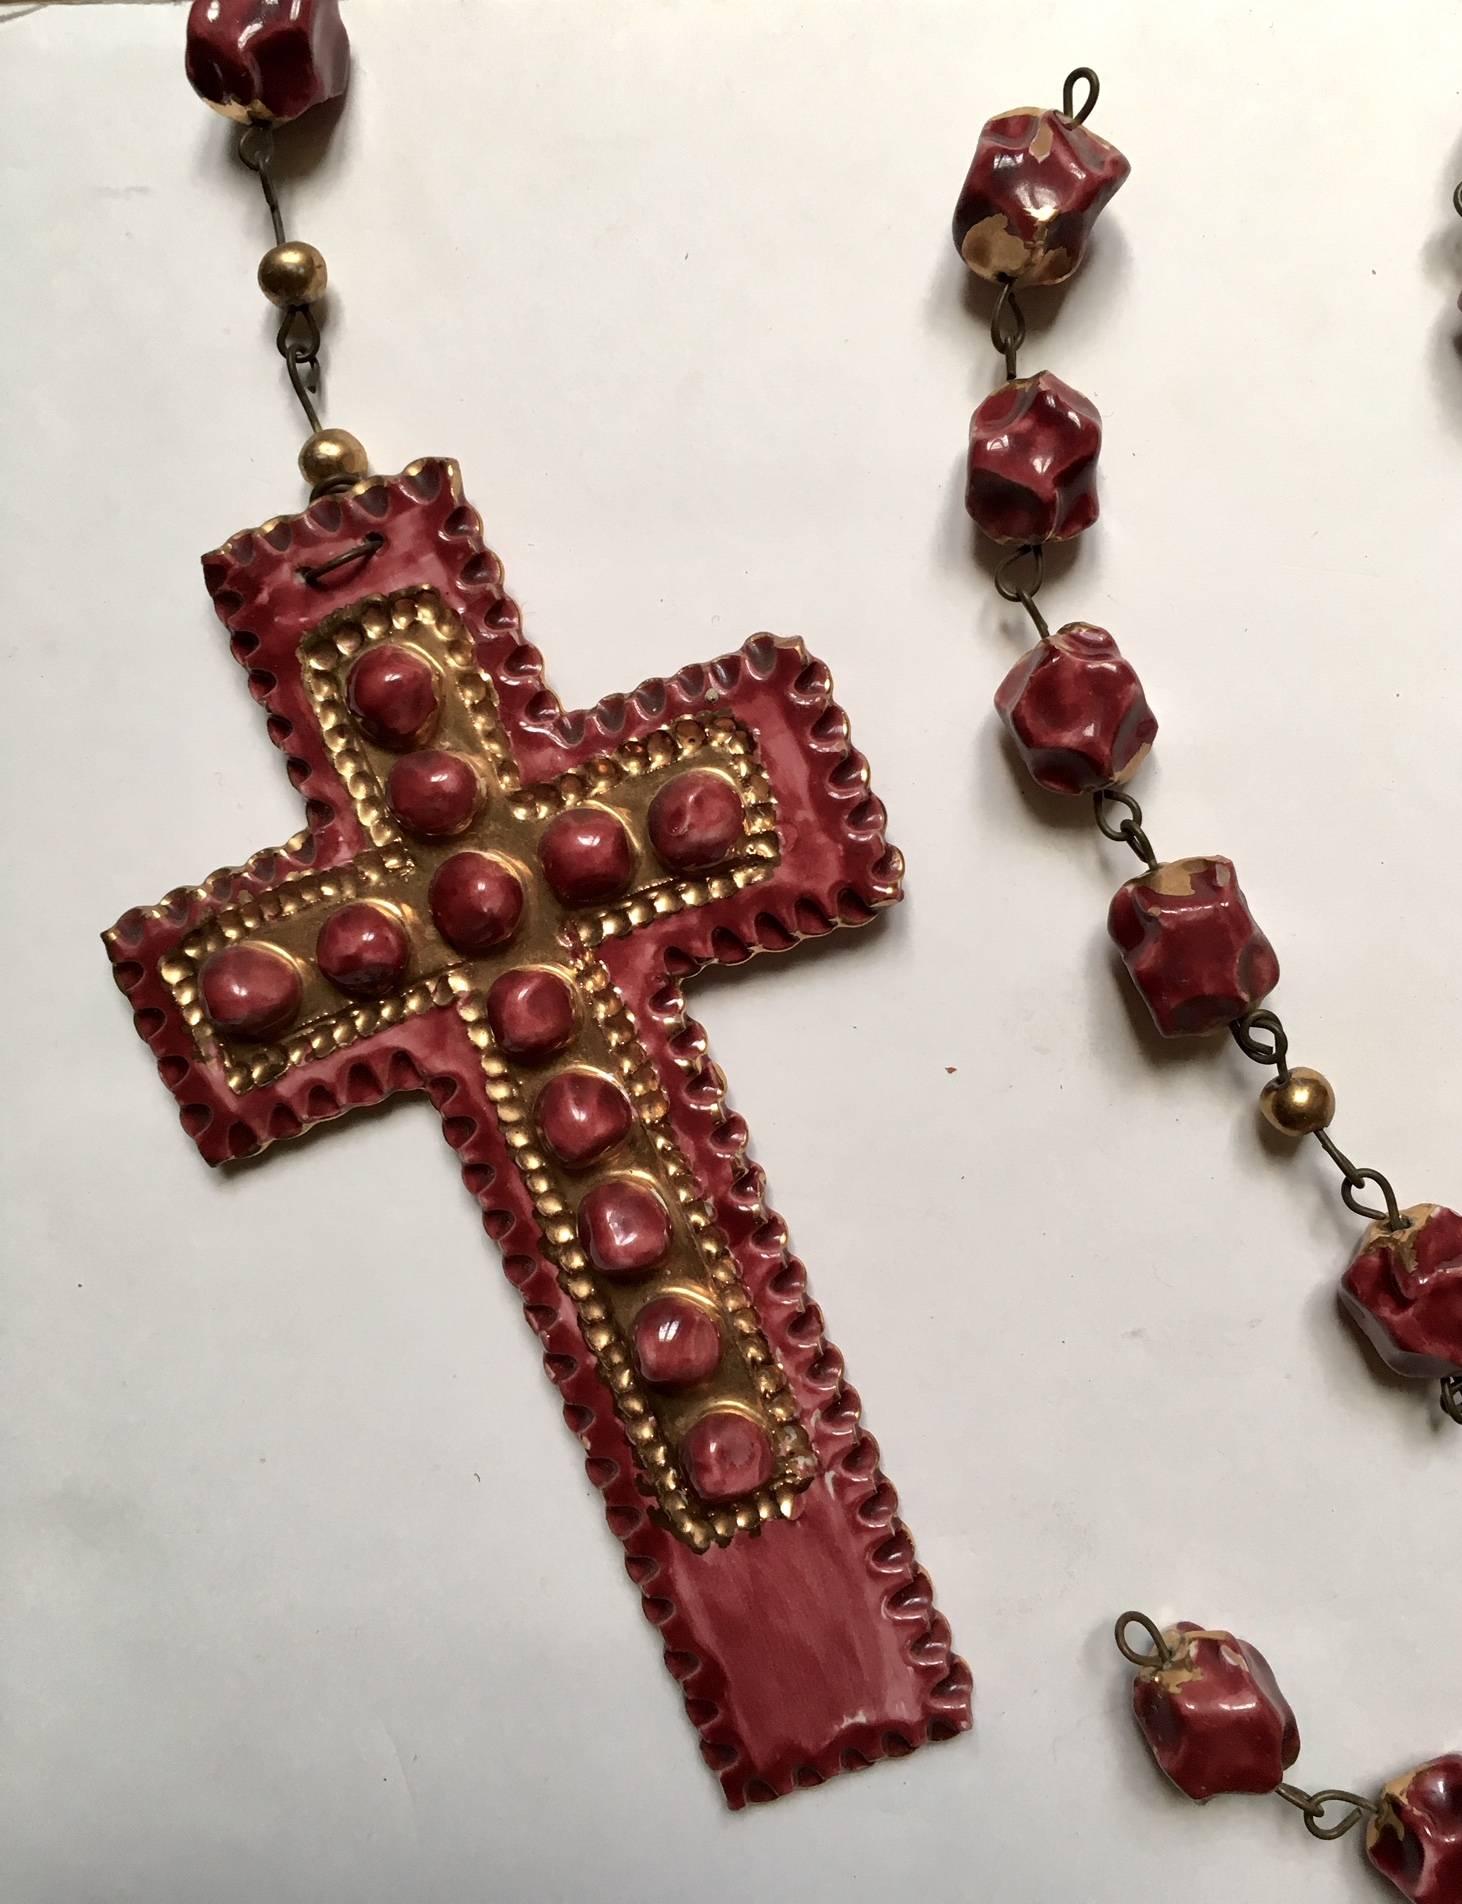 A massive Tullio Mazzotti Ceramic Rosary  by falmous manufacterer Mazzotti VMA Albisola ,Italy .
circa 1980
full lenght 200 cm (the cross only 24x14 cm)